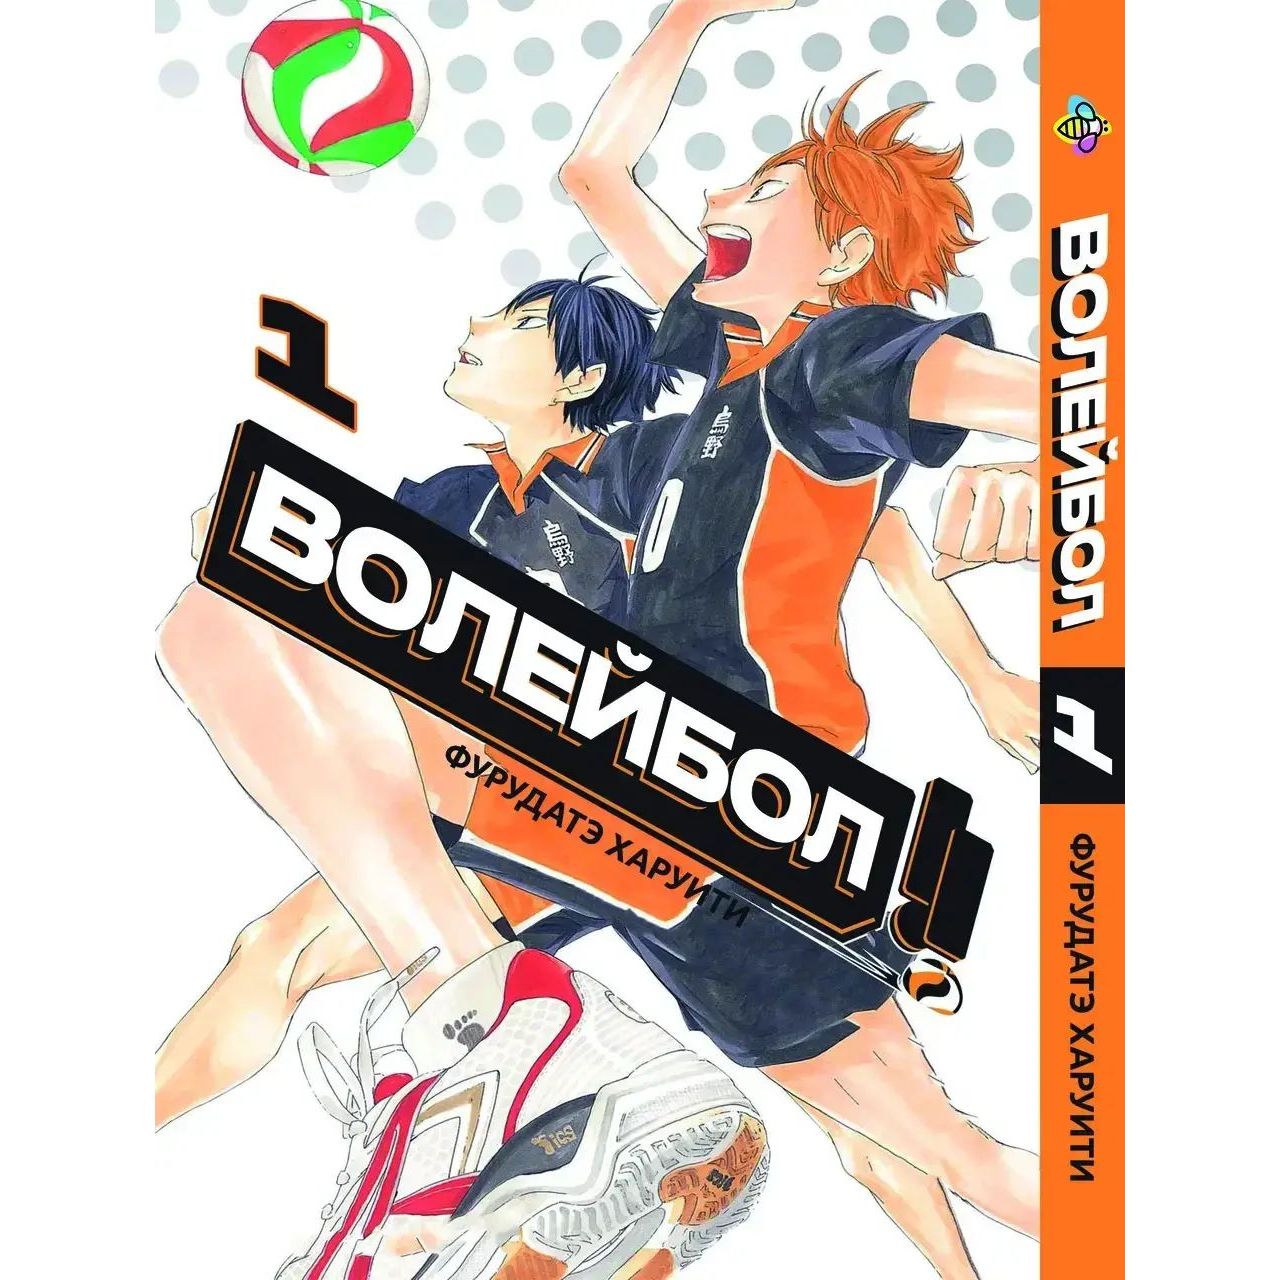 Комплект Манги Bee's Print Volleyball Волейбол BP VLSET 01 том 1-5 - Фурудате Харуіті (1754784107.0) - фото 2